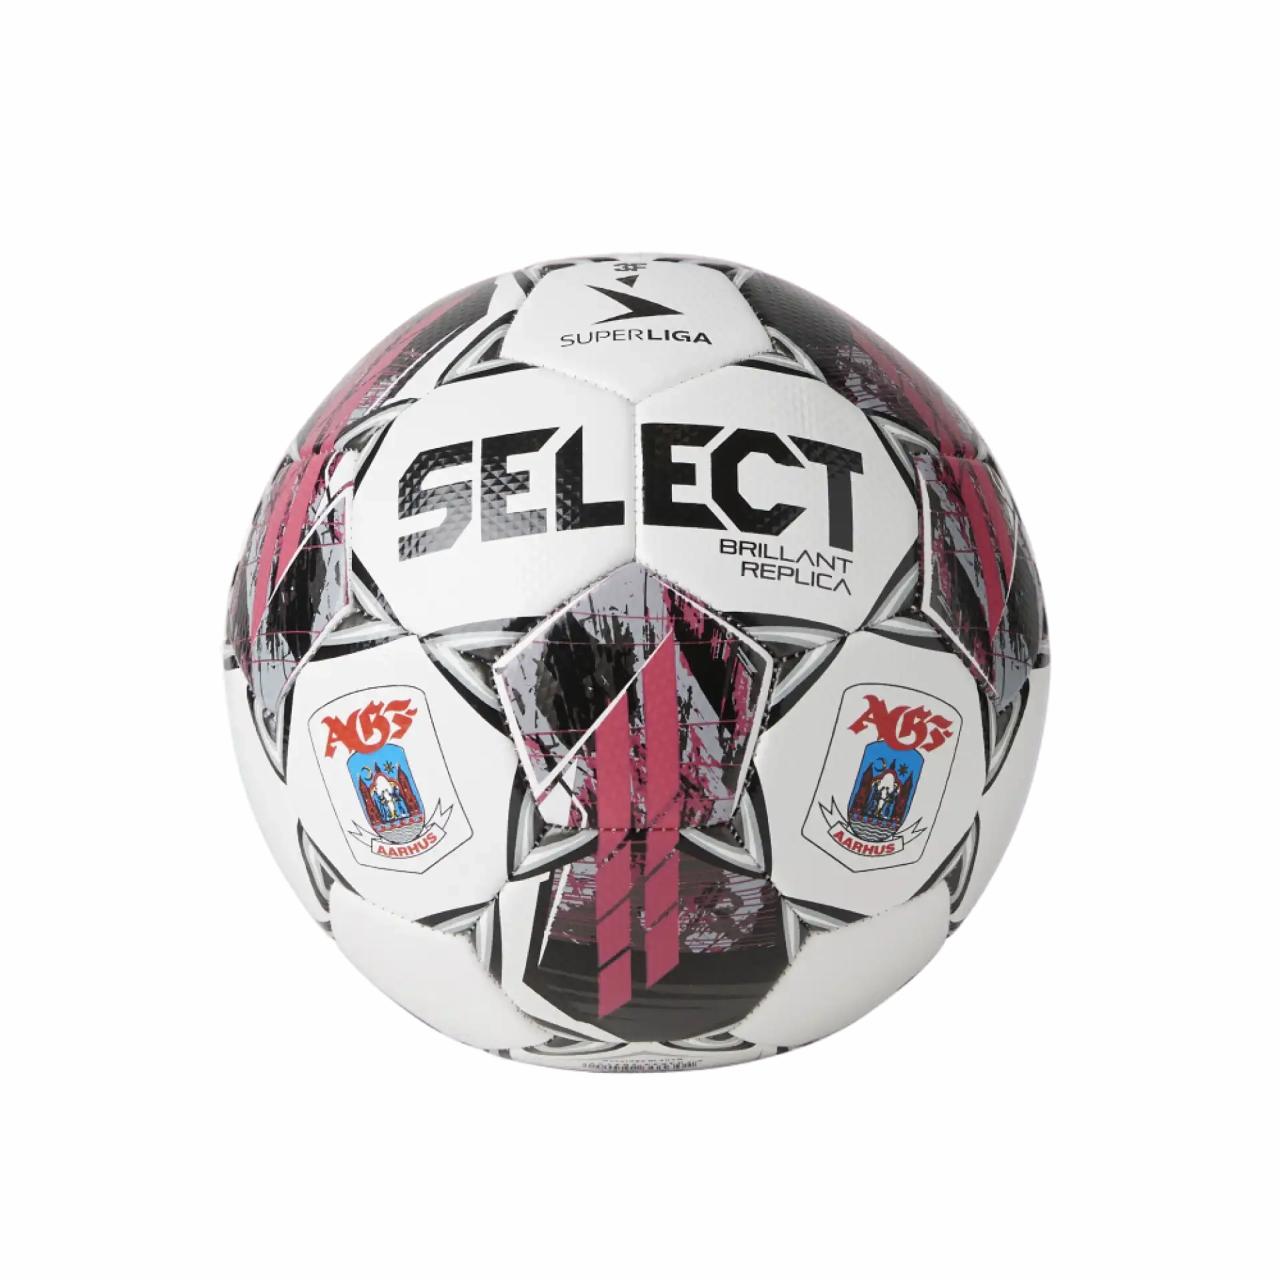 AGF Select Fodbold